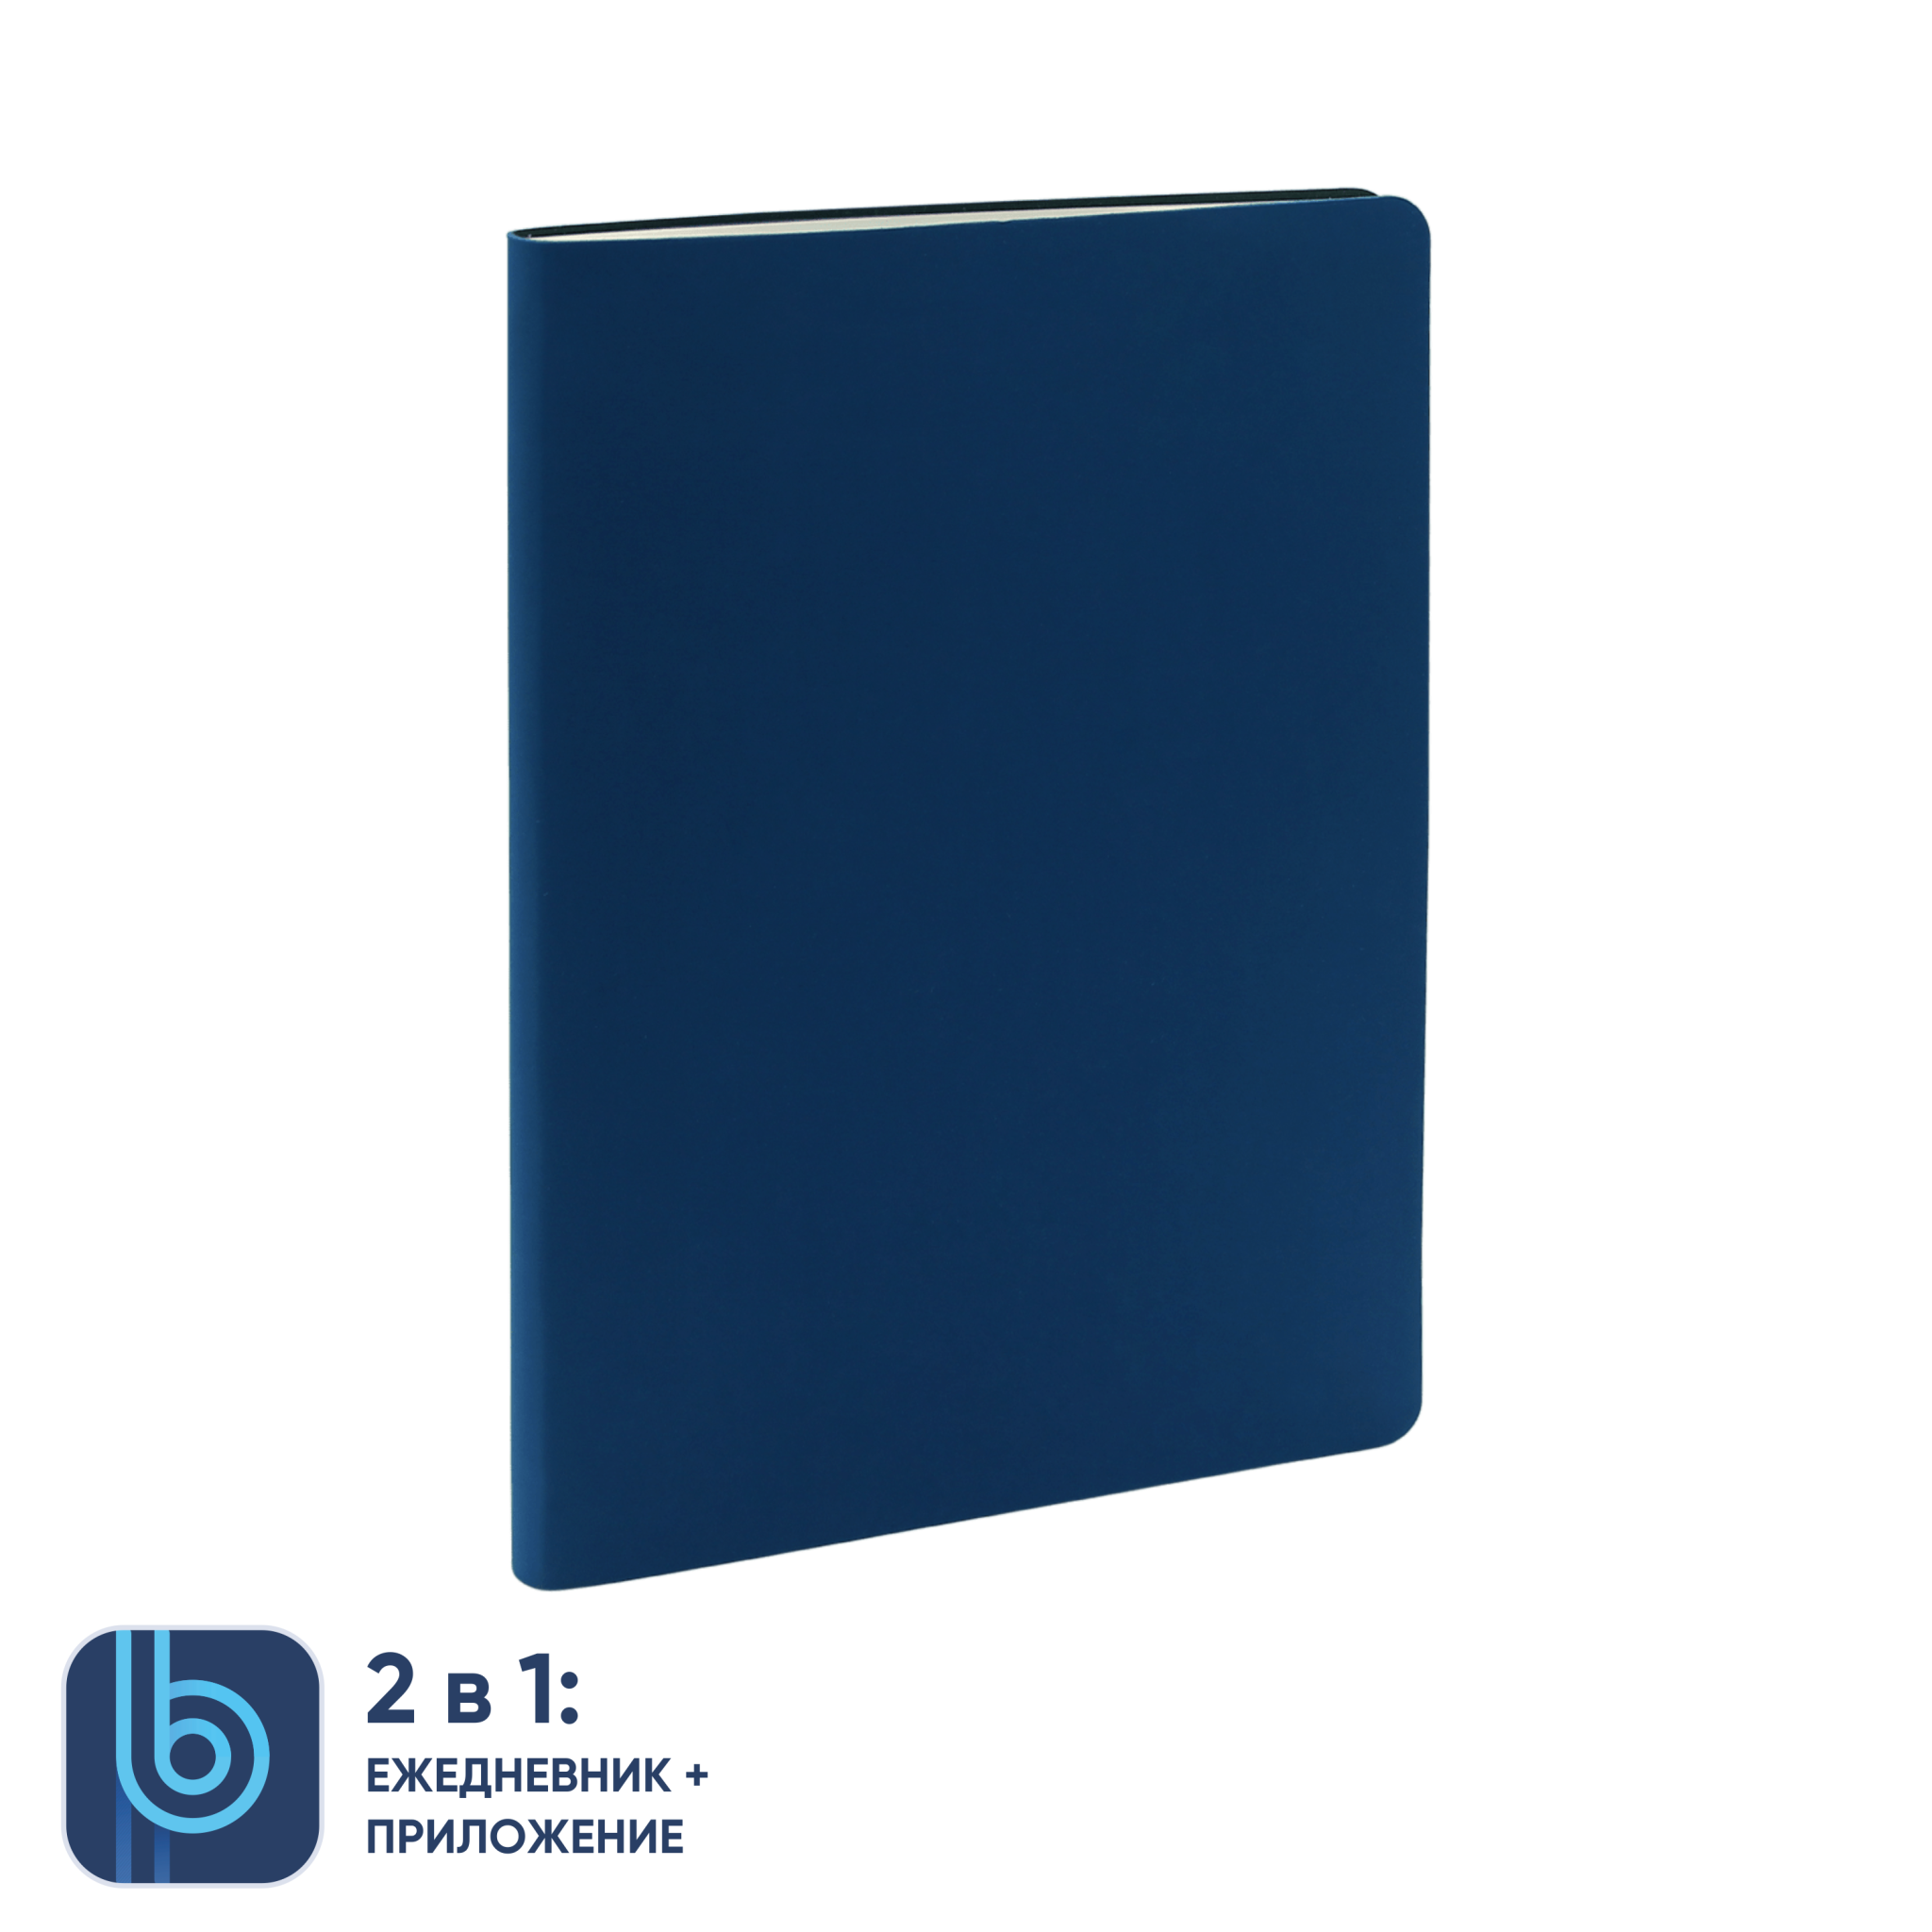 Ежедневник Bplanner.01 в подарочной коробке (синий), синий, картон